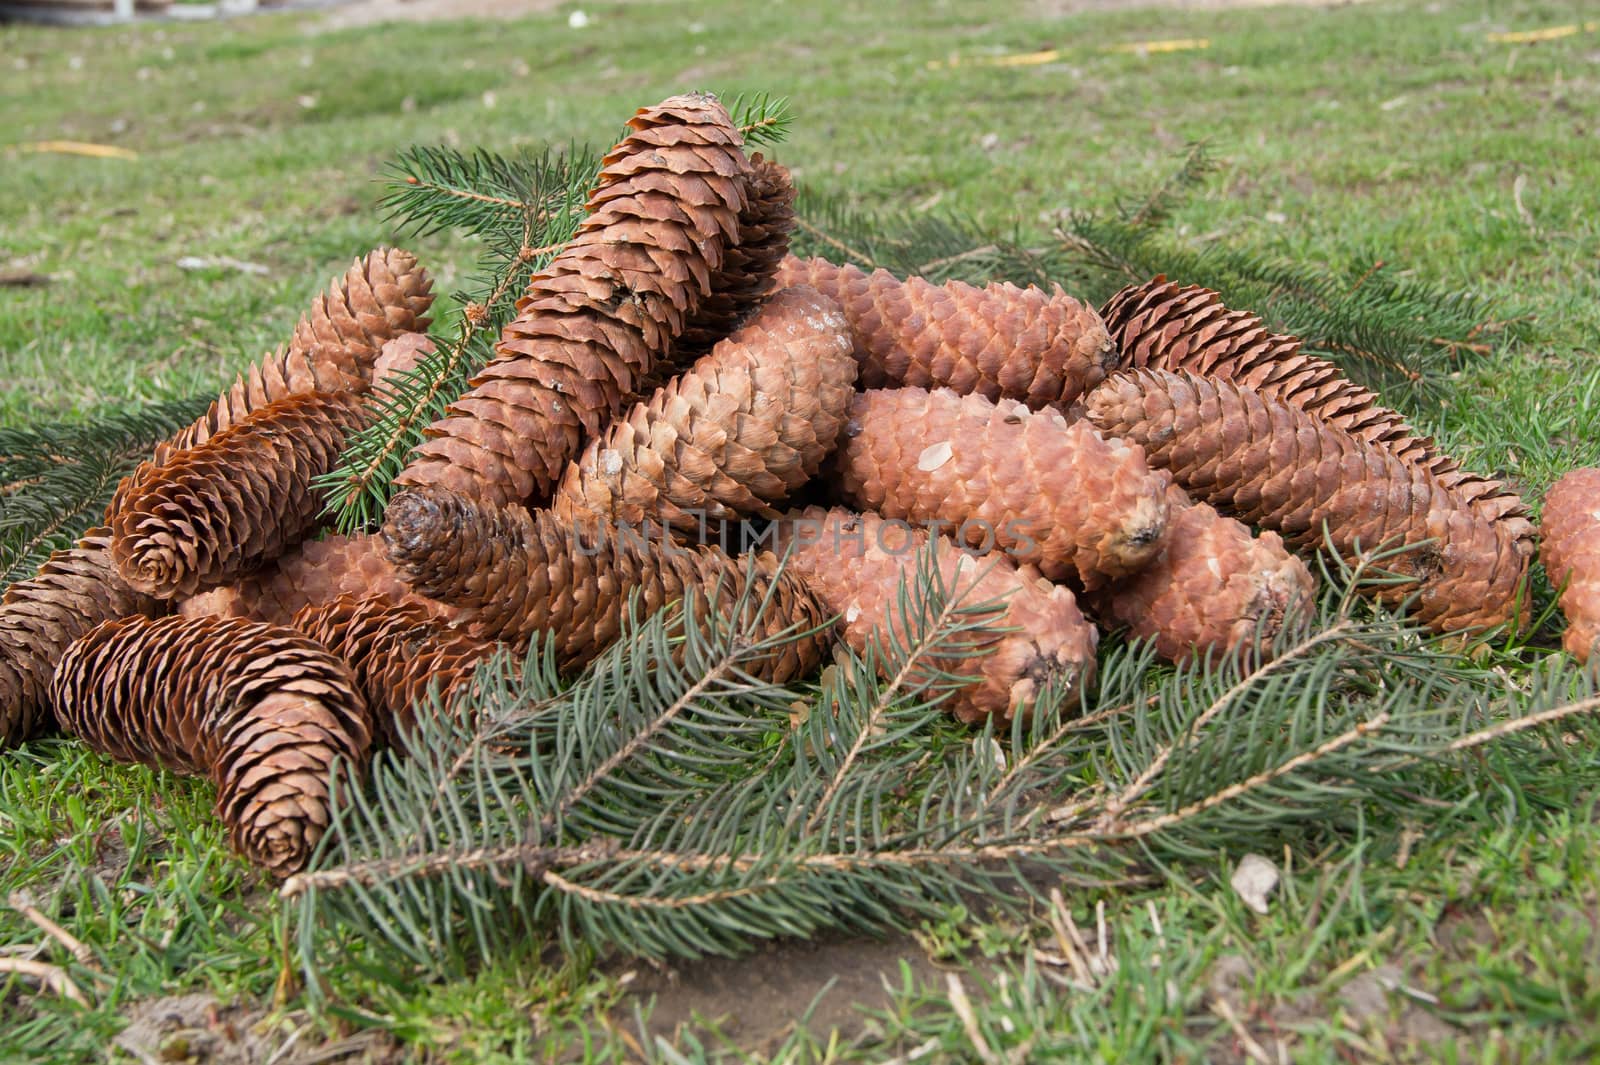  The Pine cones by dadalia